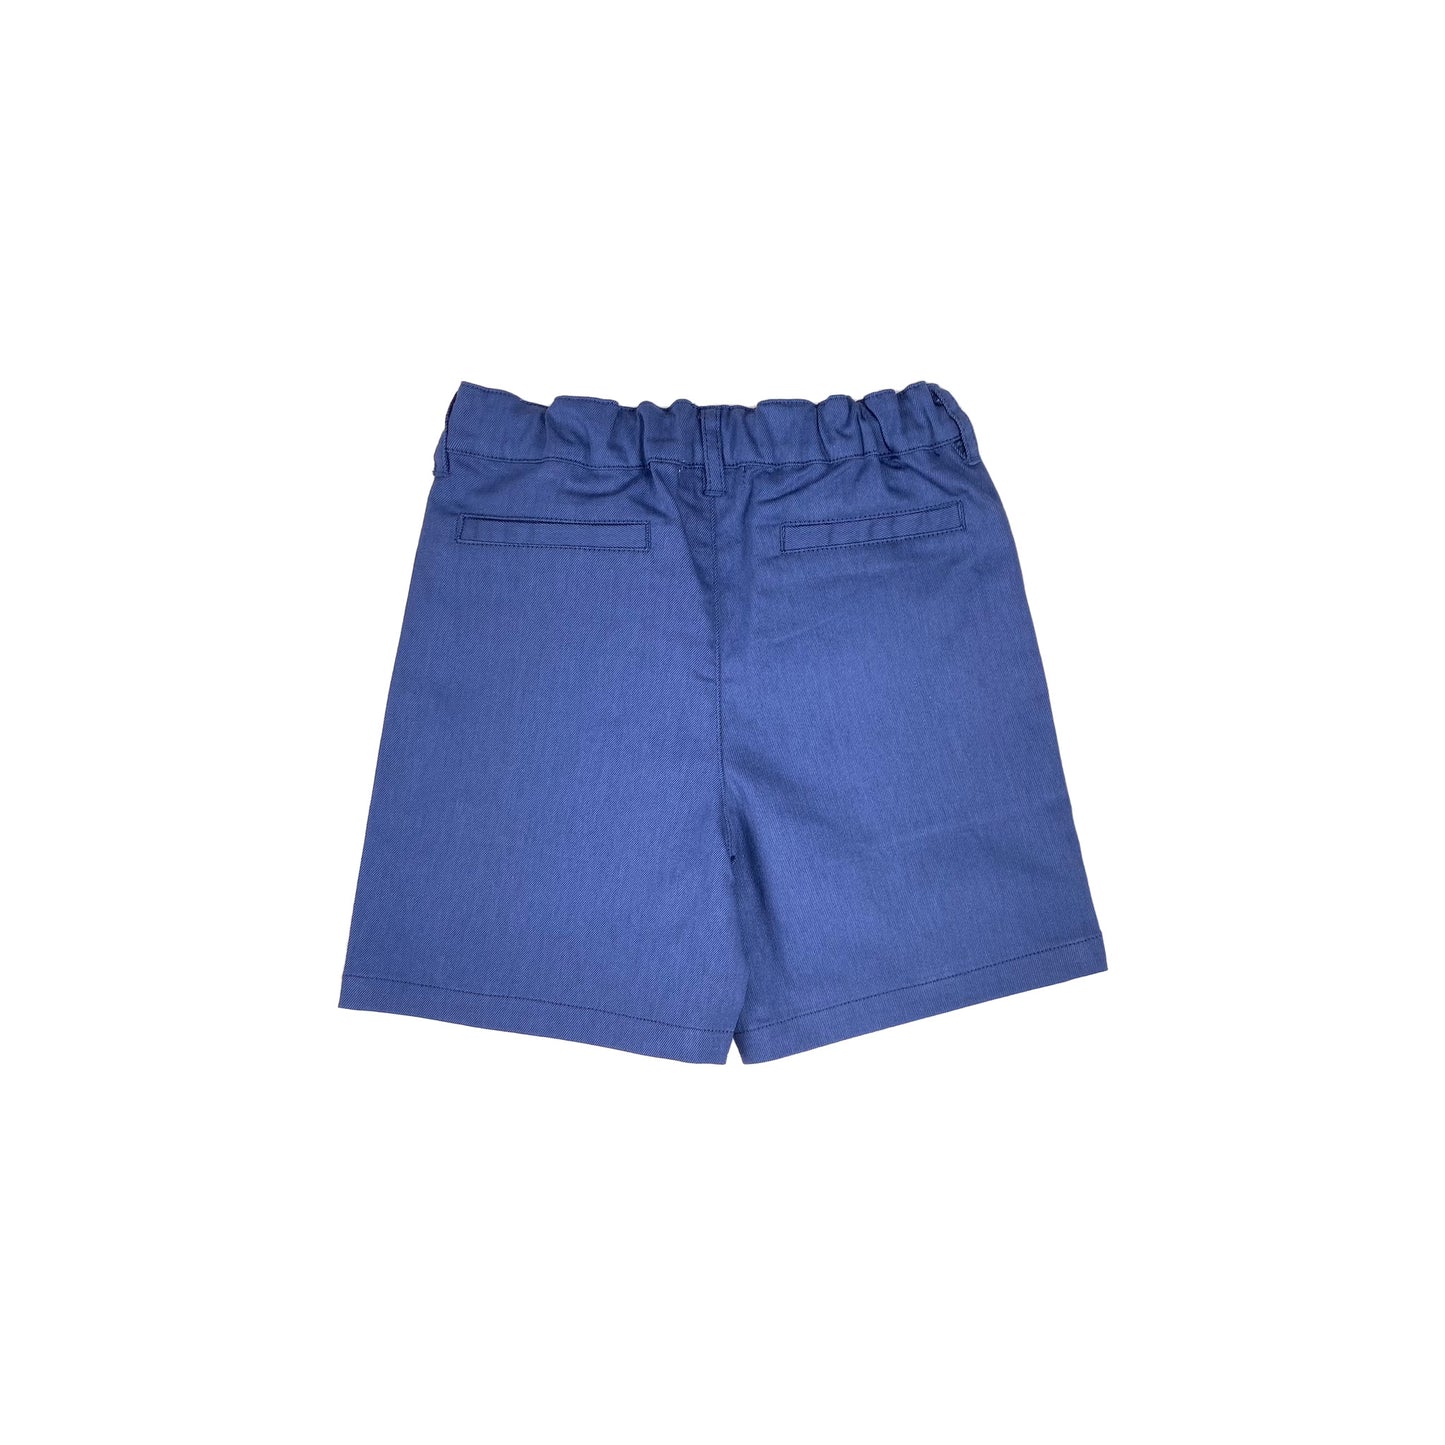 Ishtex ® Navy Twill Boy's Shorts